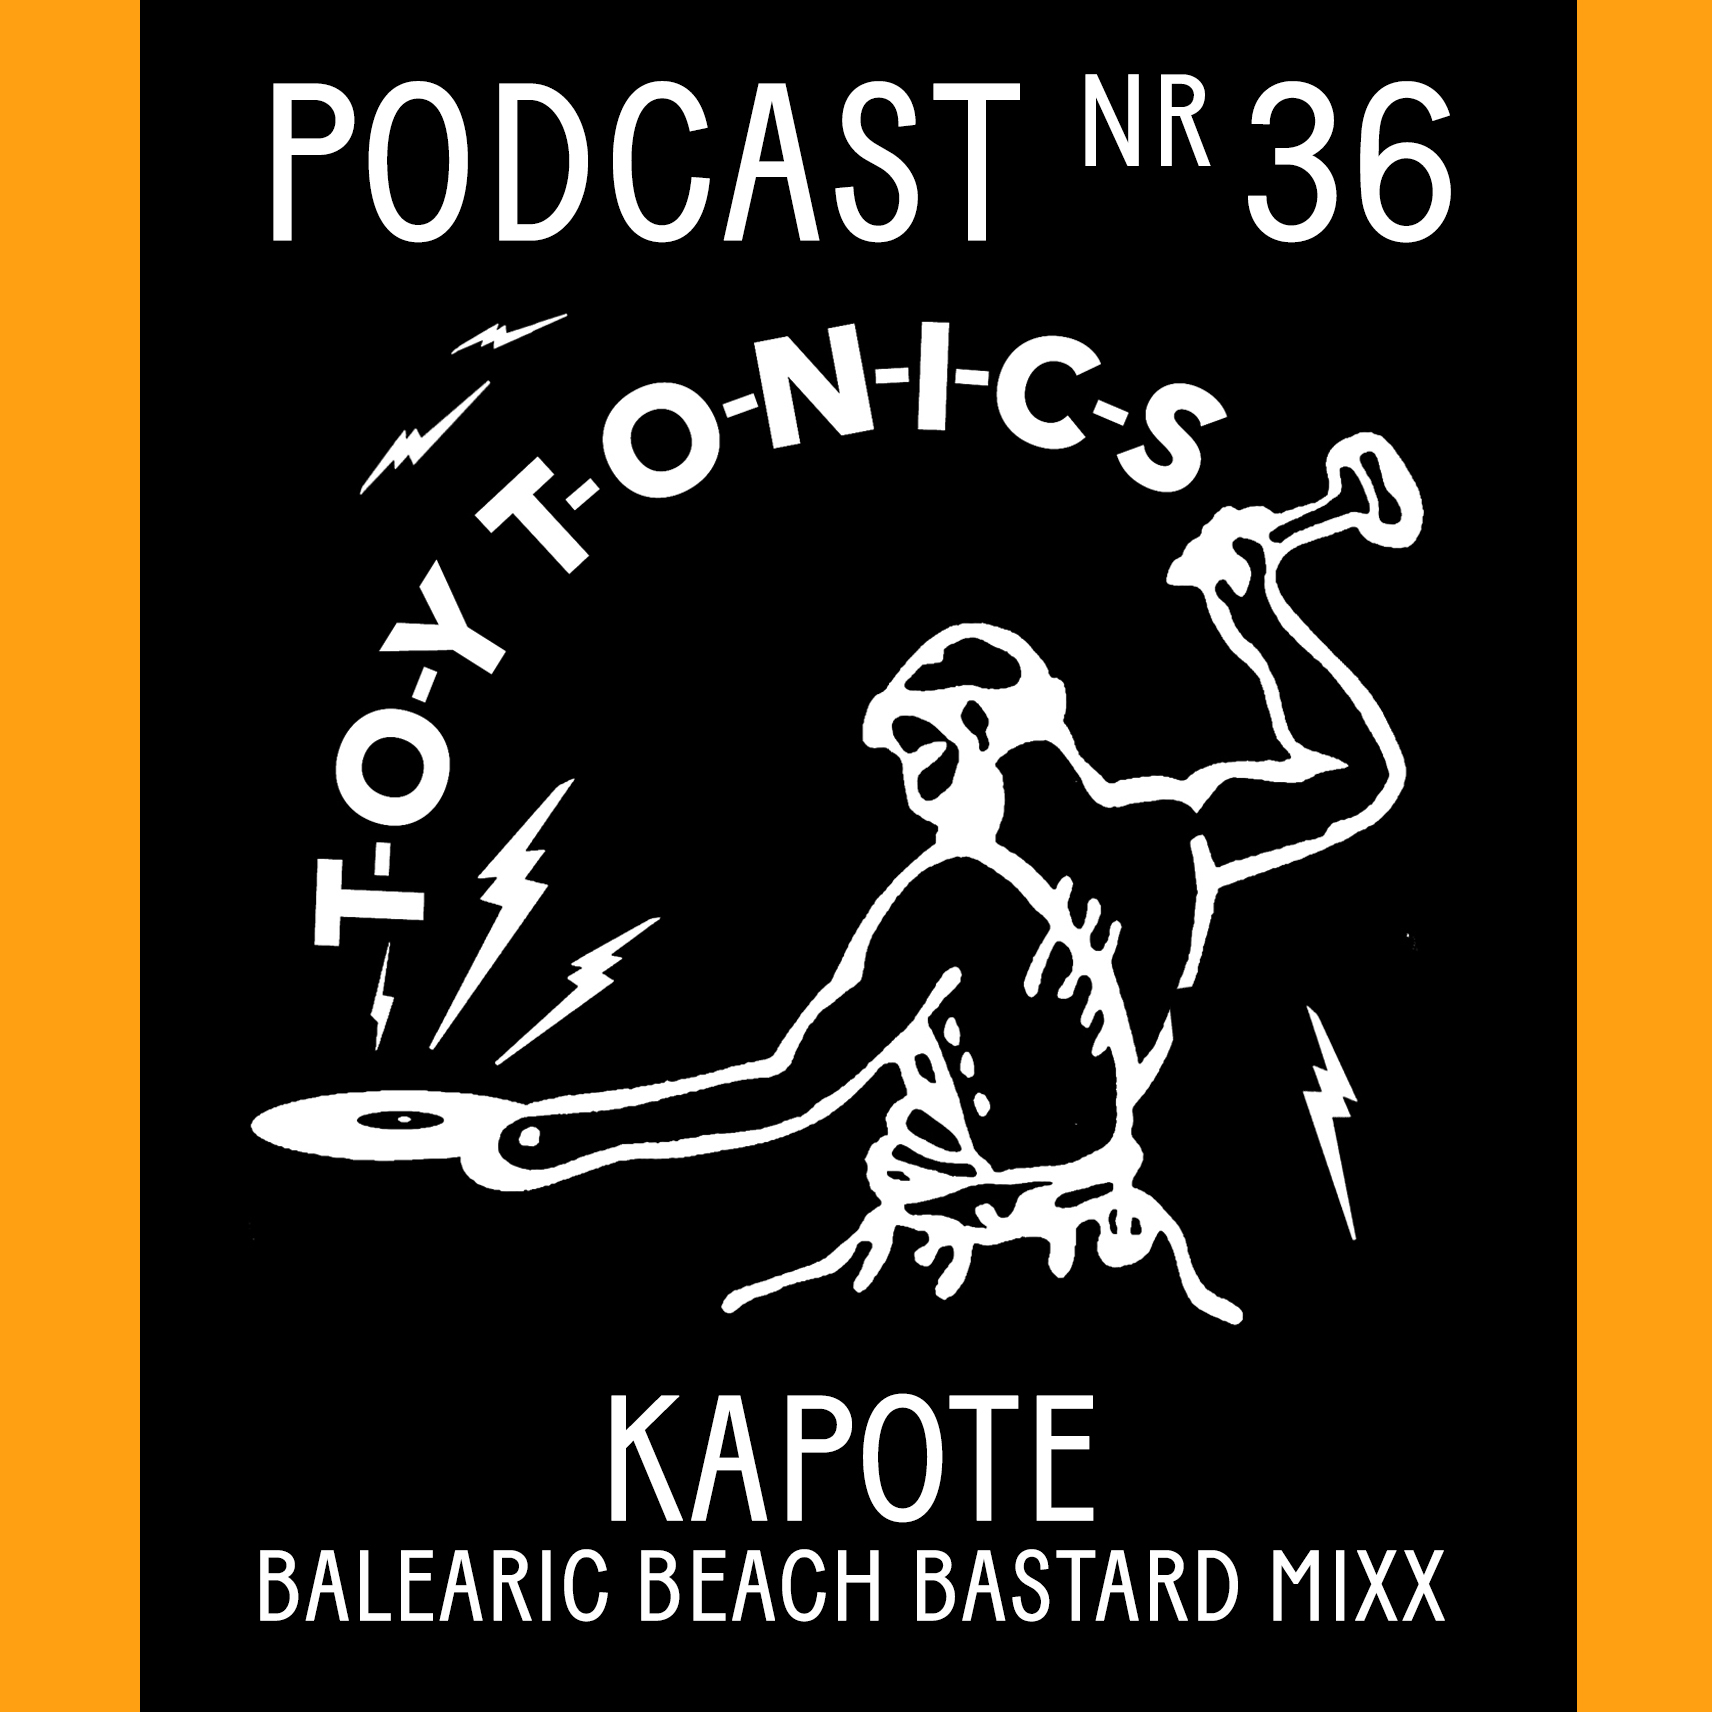 PODCAST NR 36- KAPOTE Balearic Beach Bastard Mixx